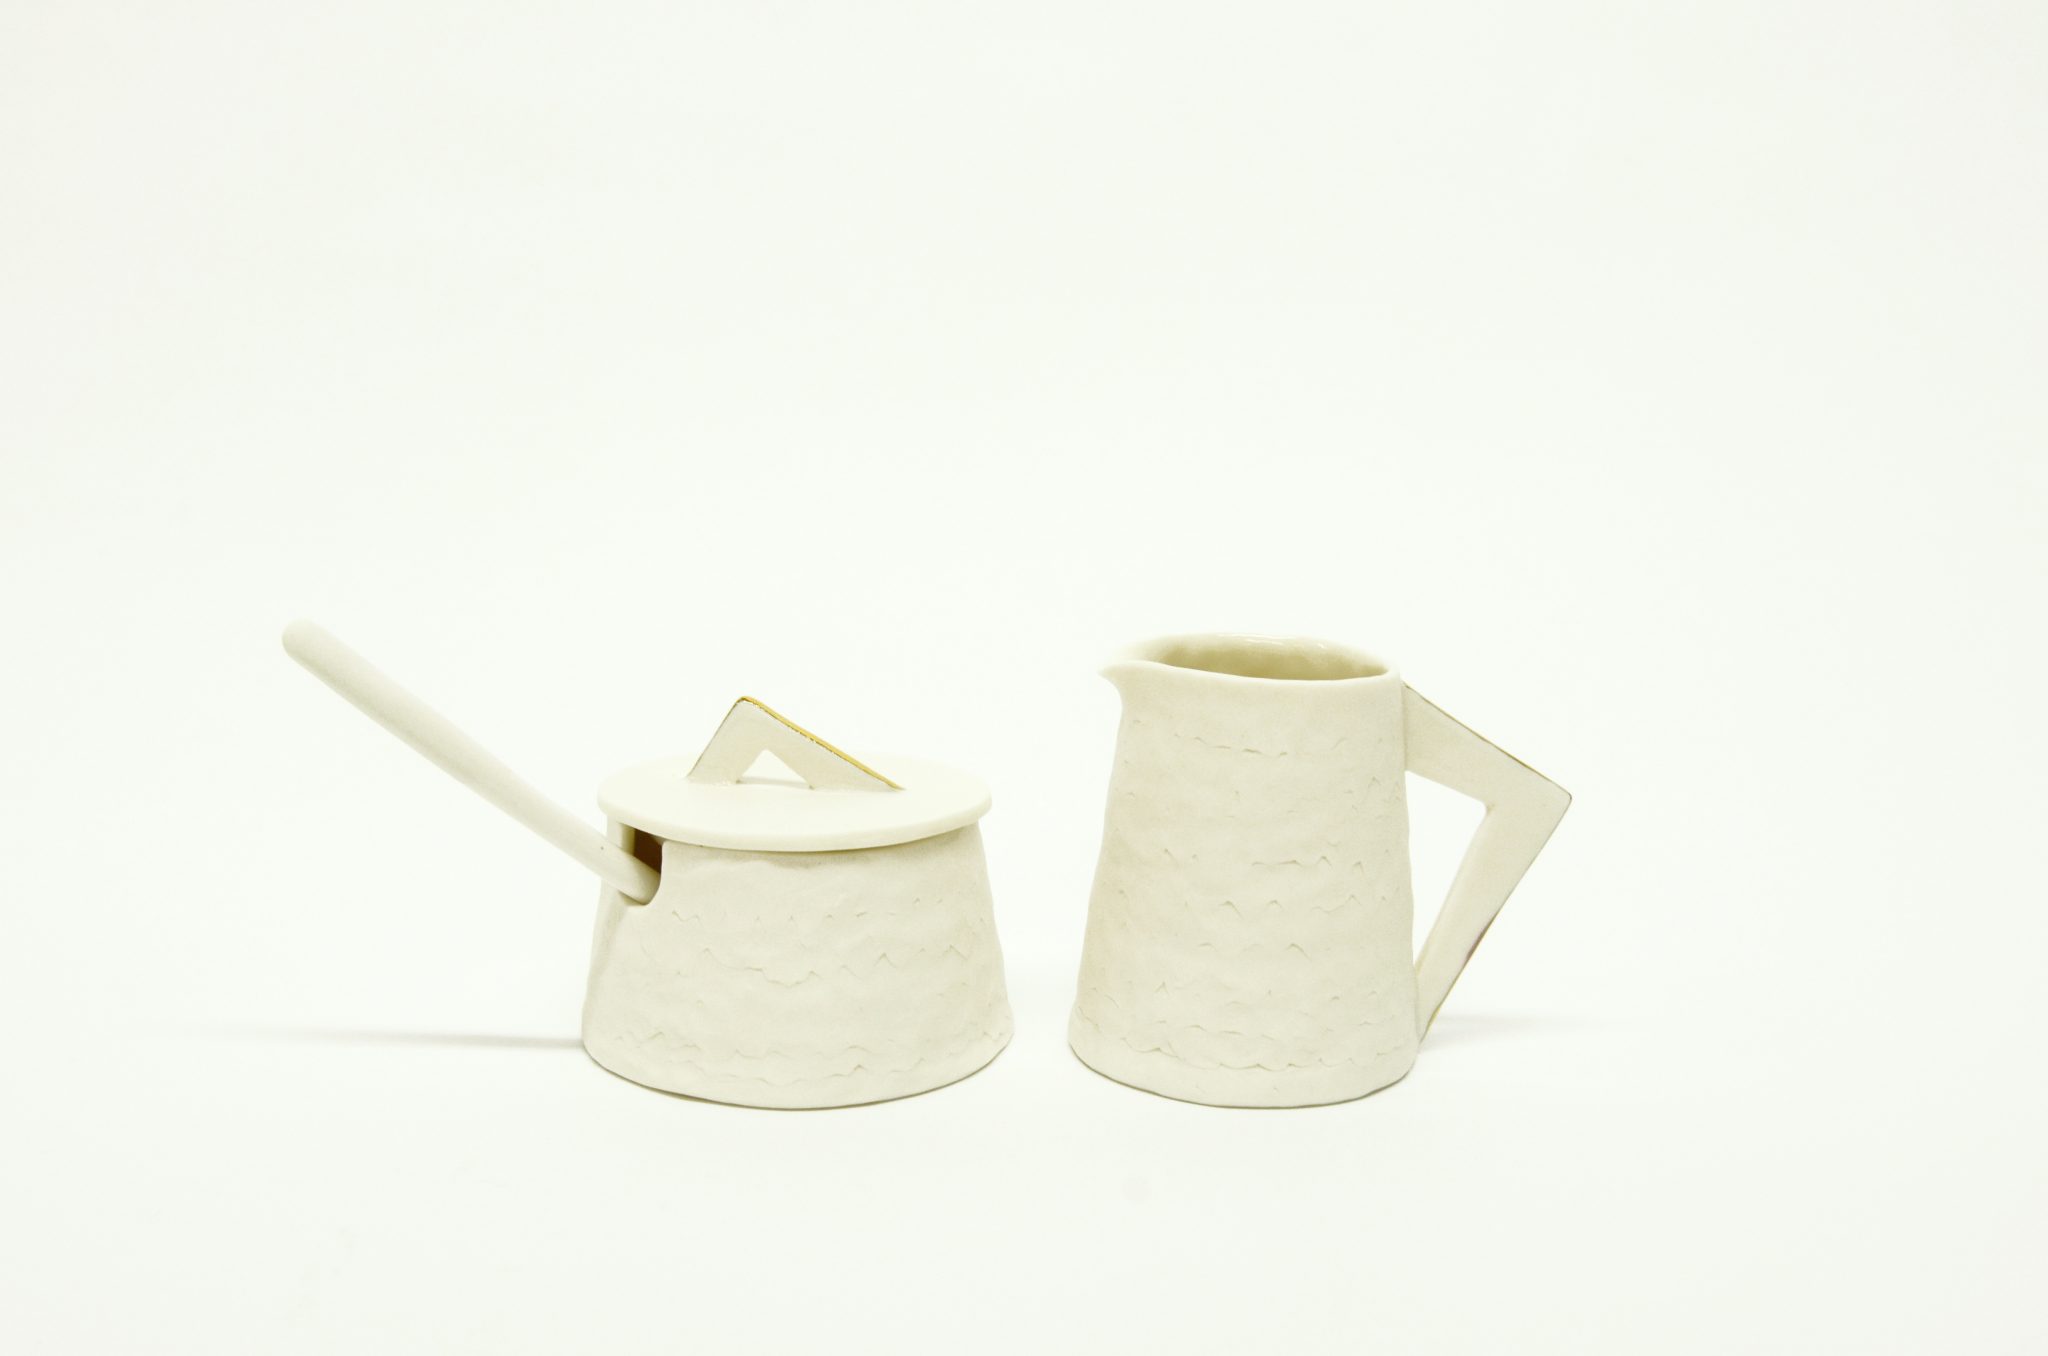 Image K!-Design by Katja Van Breedam | Artistic ceramic creations and functional ceramic design